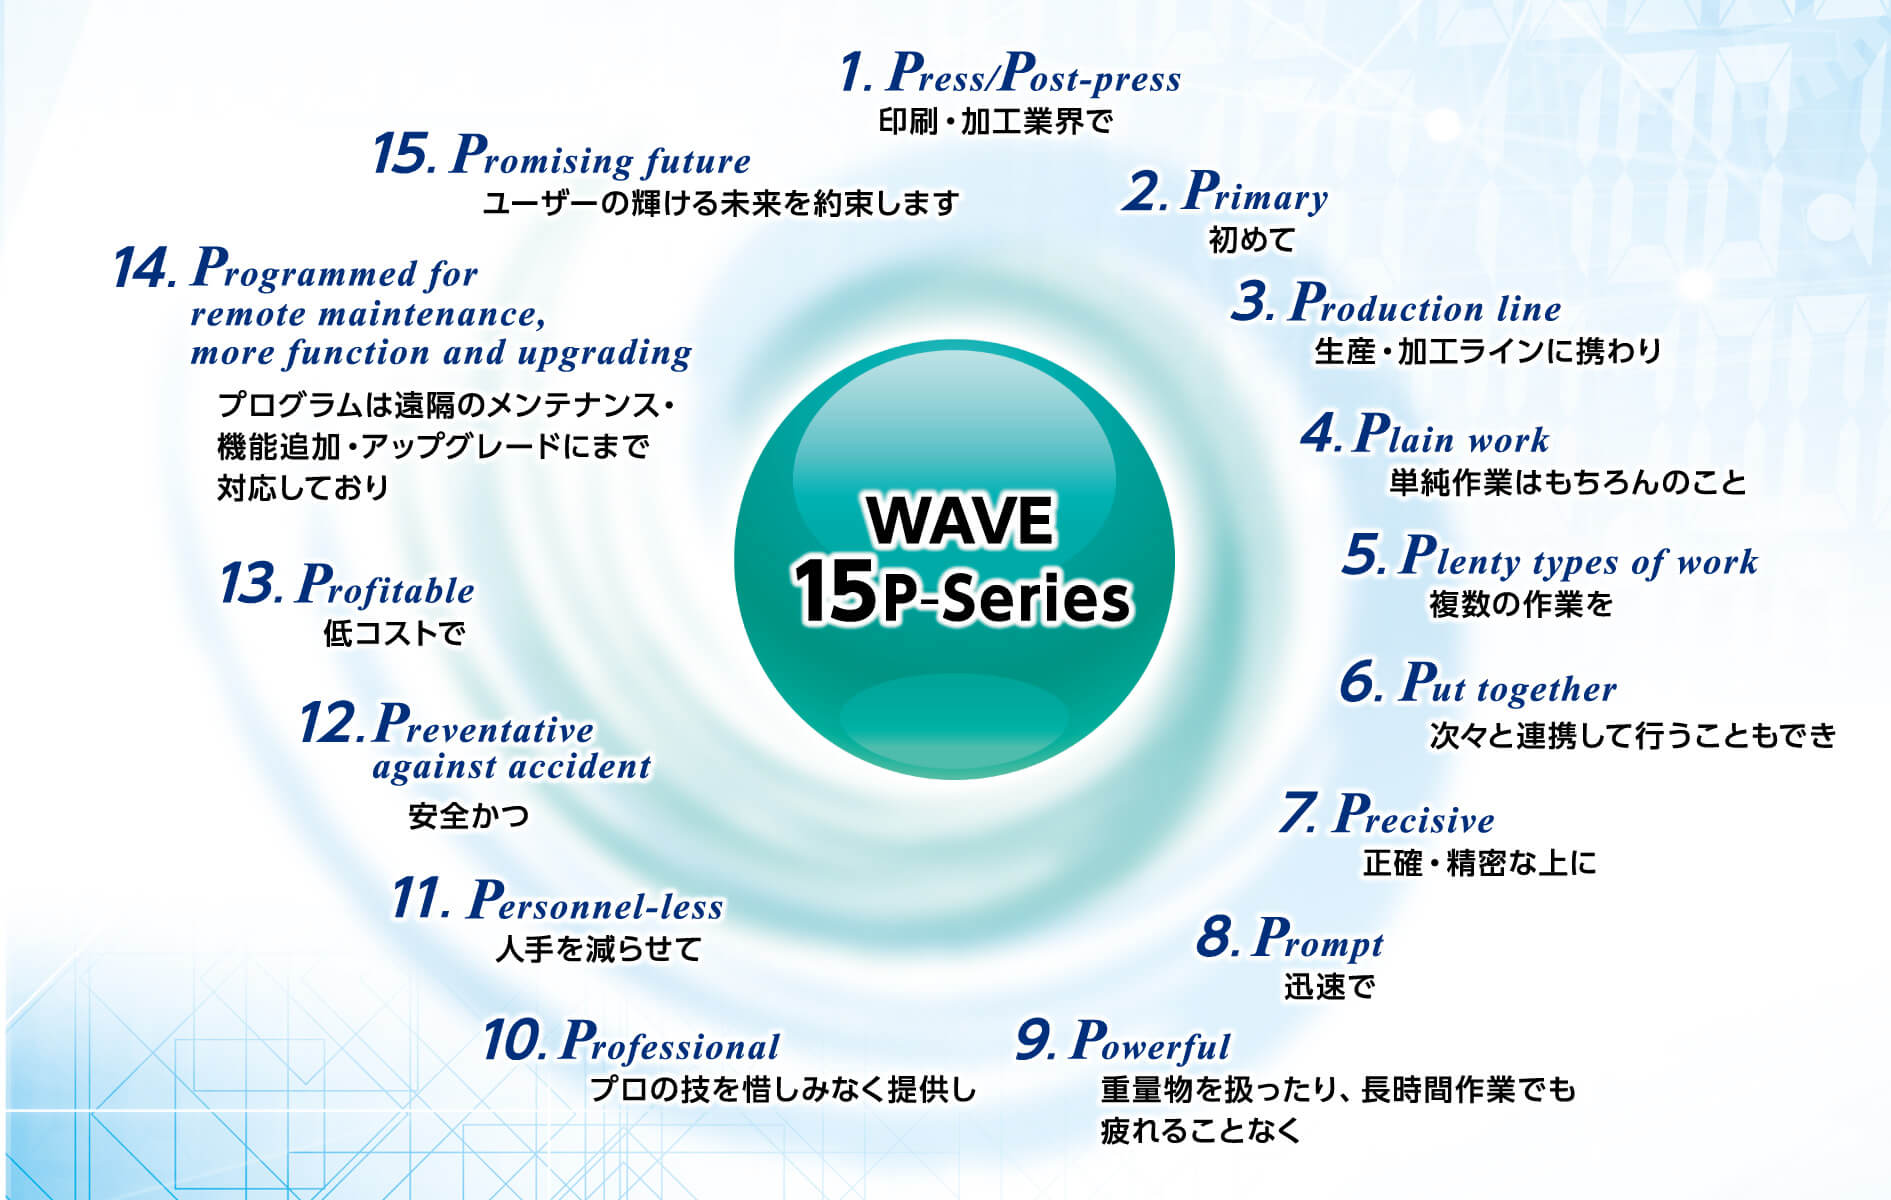 「WAVE 15P-Series」、名前の由来